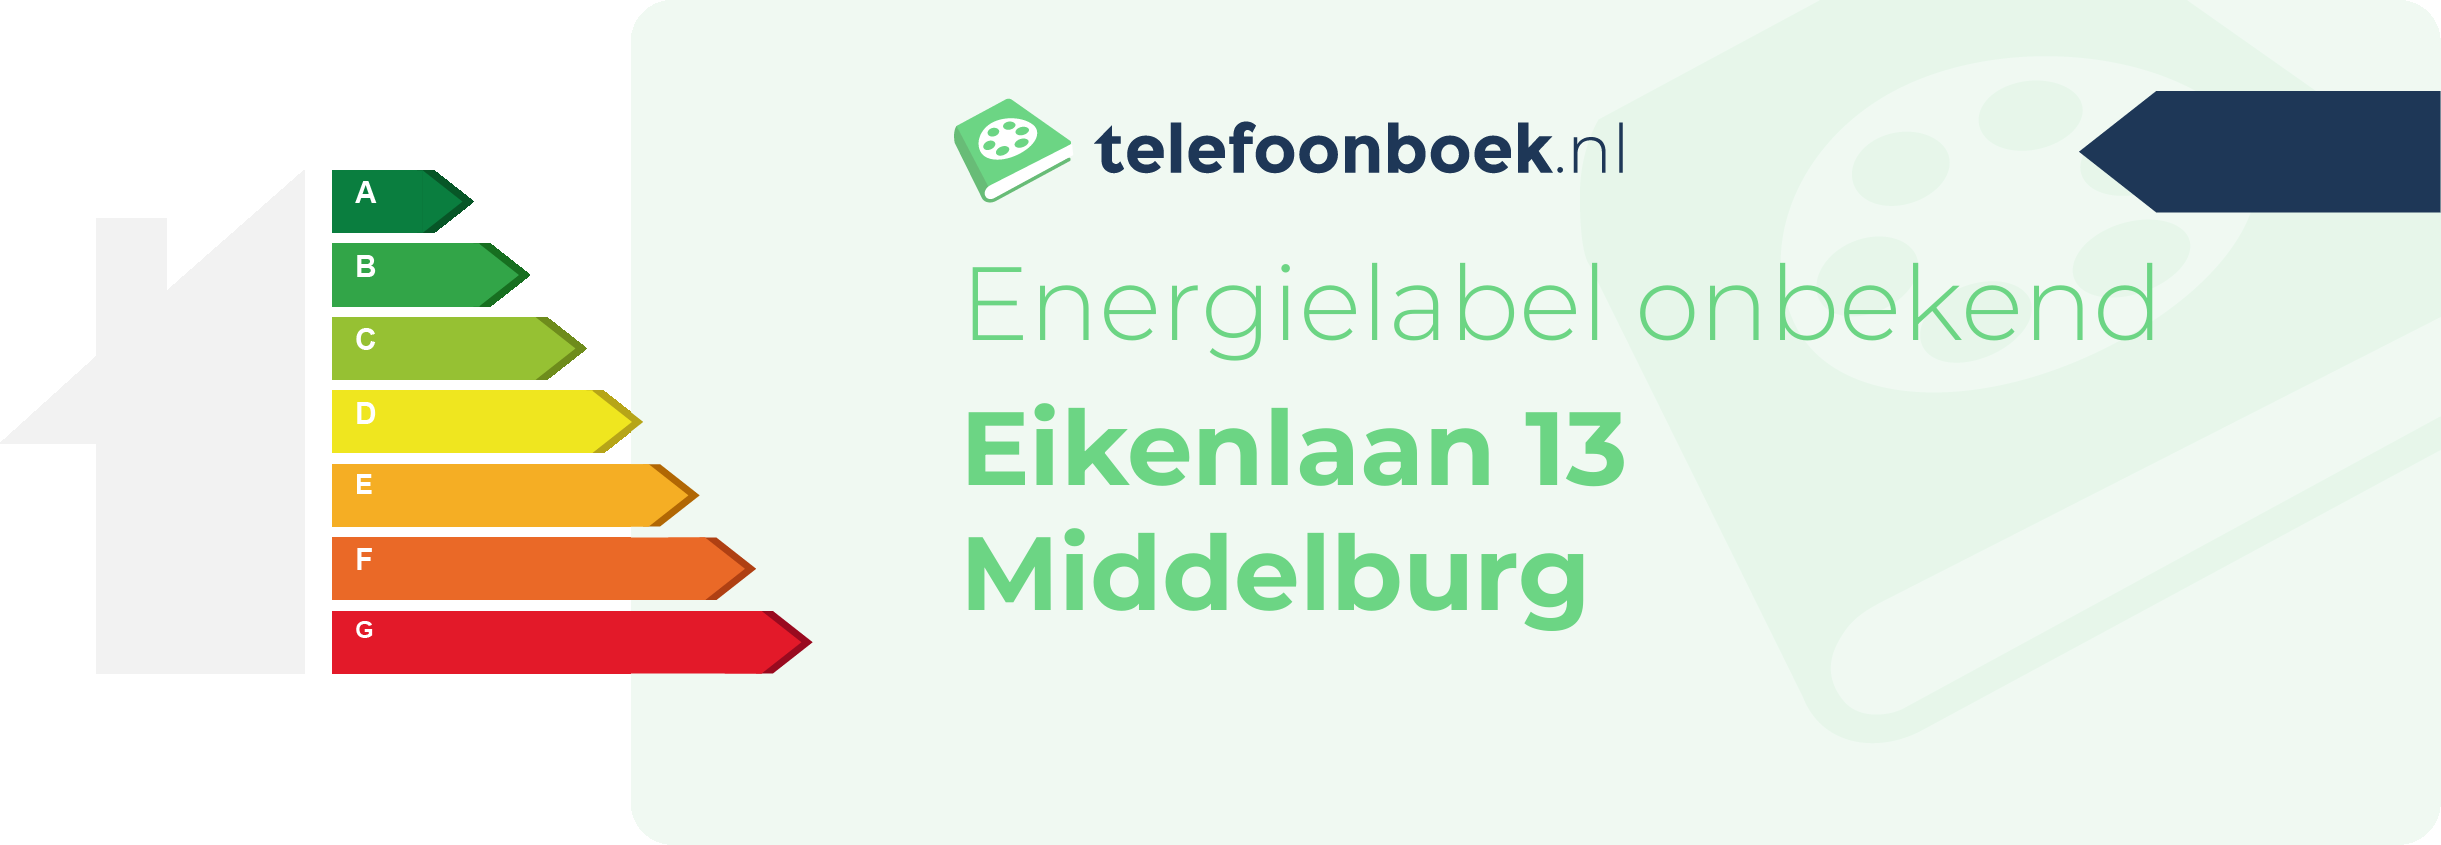 Energielabel Eikenlaan 13 Middelburg